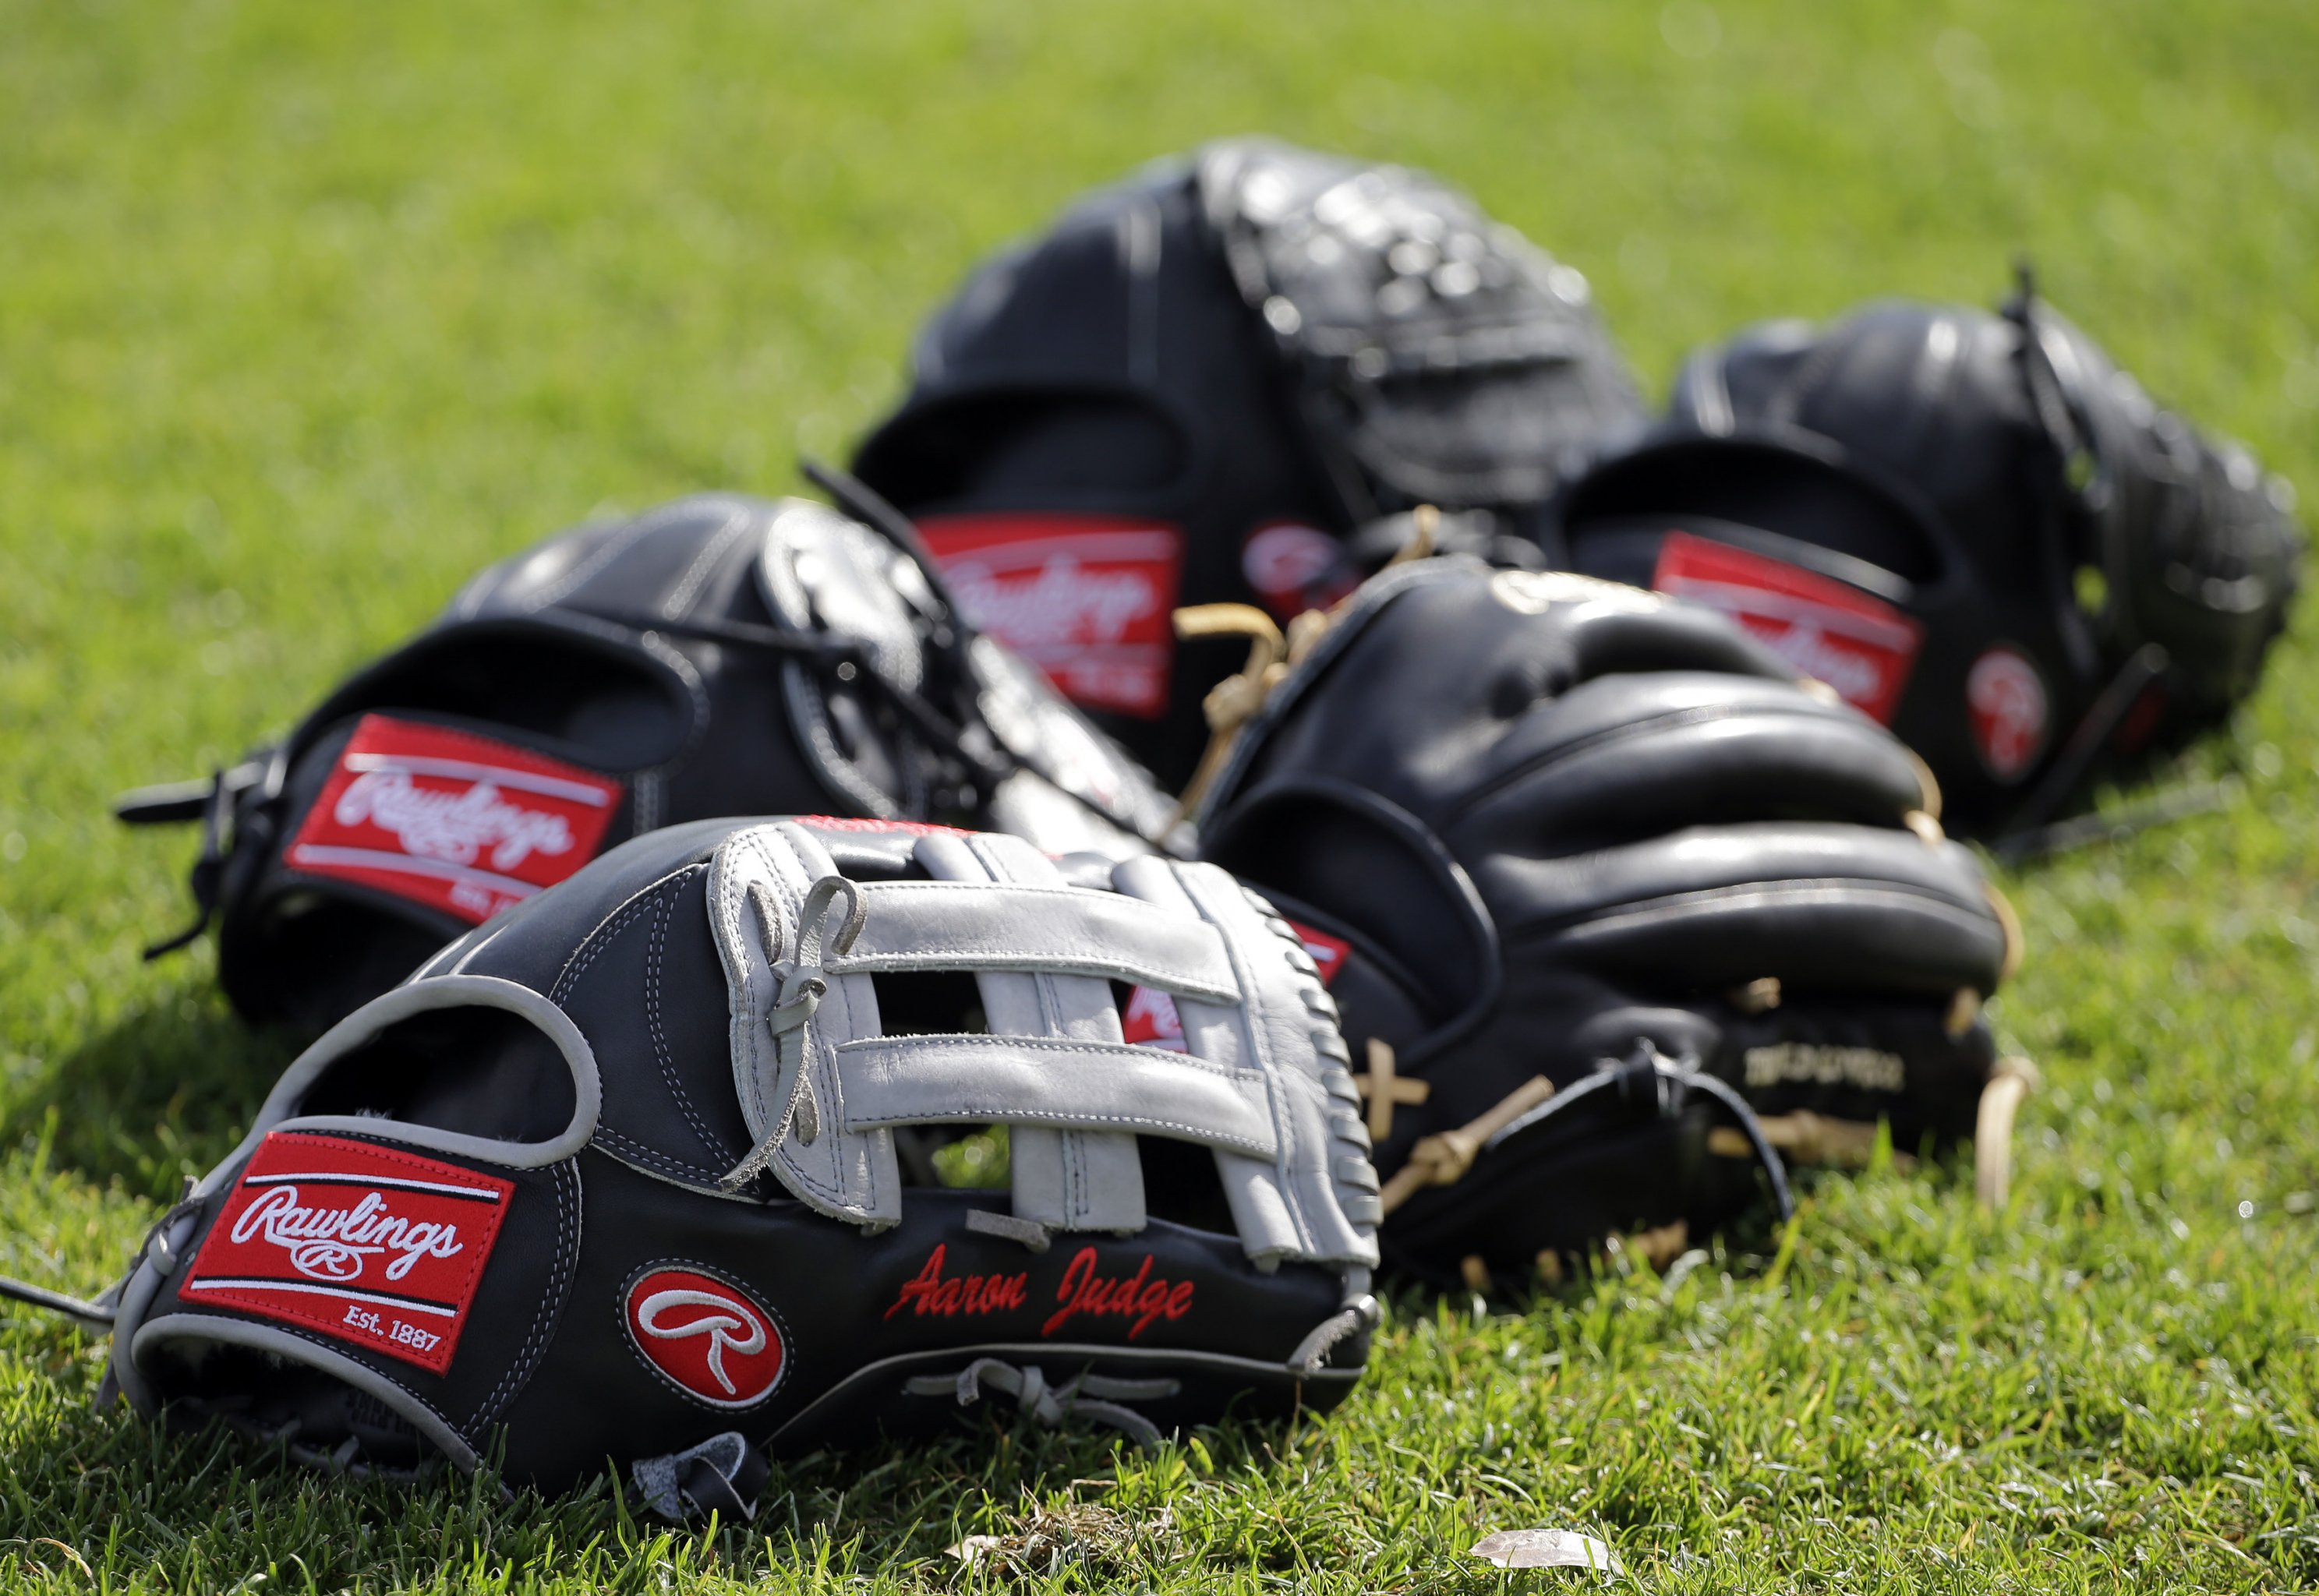 Major league baseball gloves reflect players' personal choices